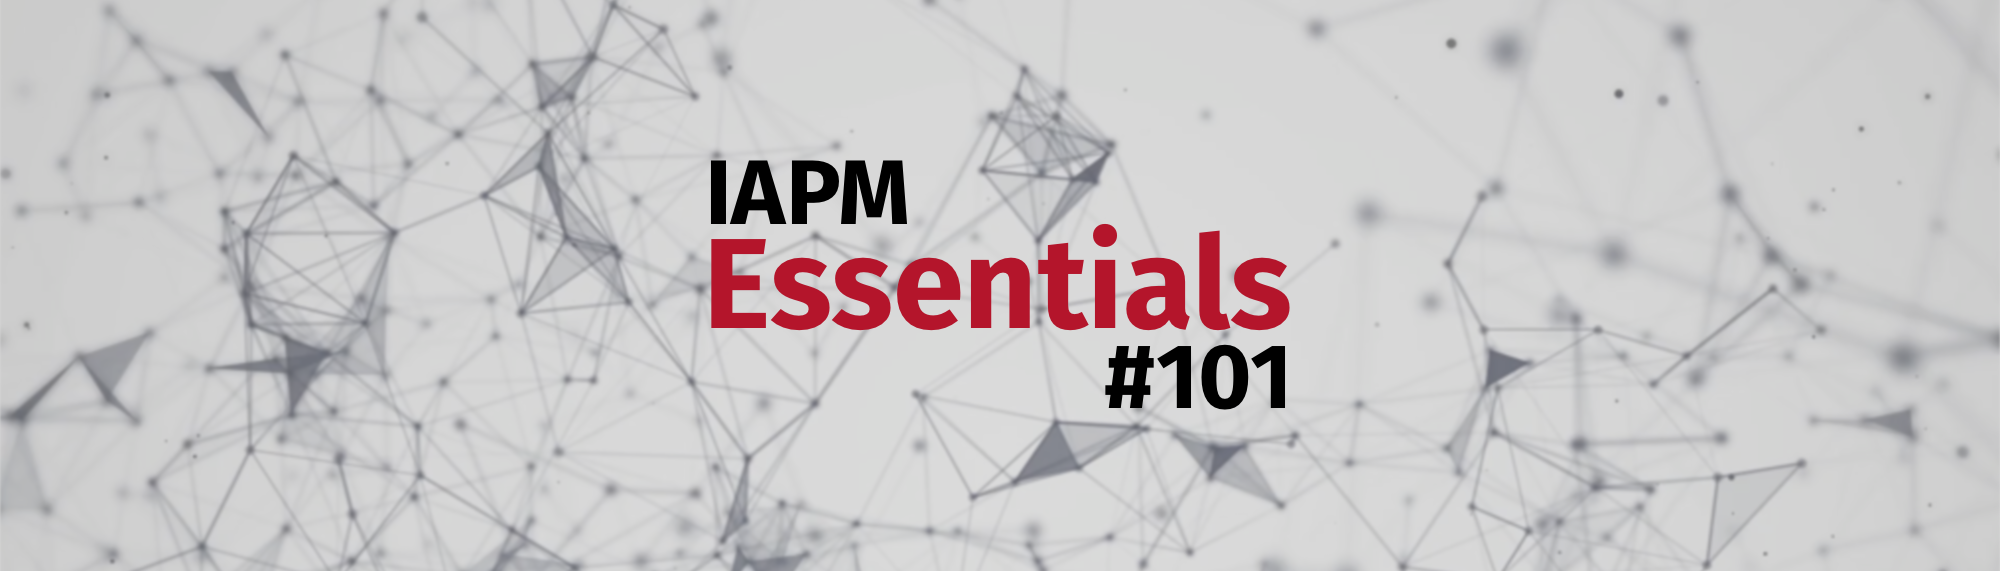 IAPM Essentials #101 - PM Neuigkeiten | IAPM